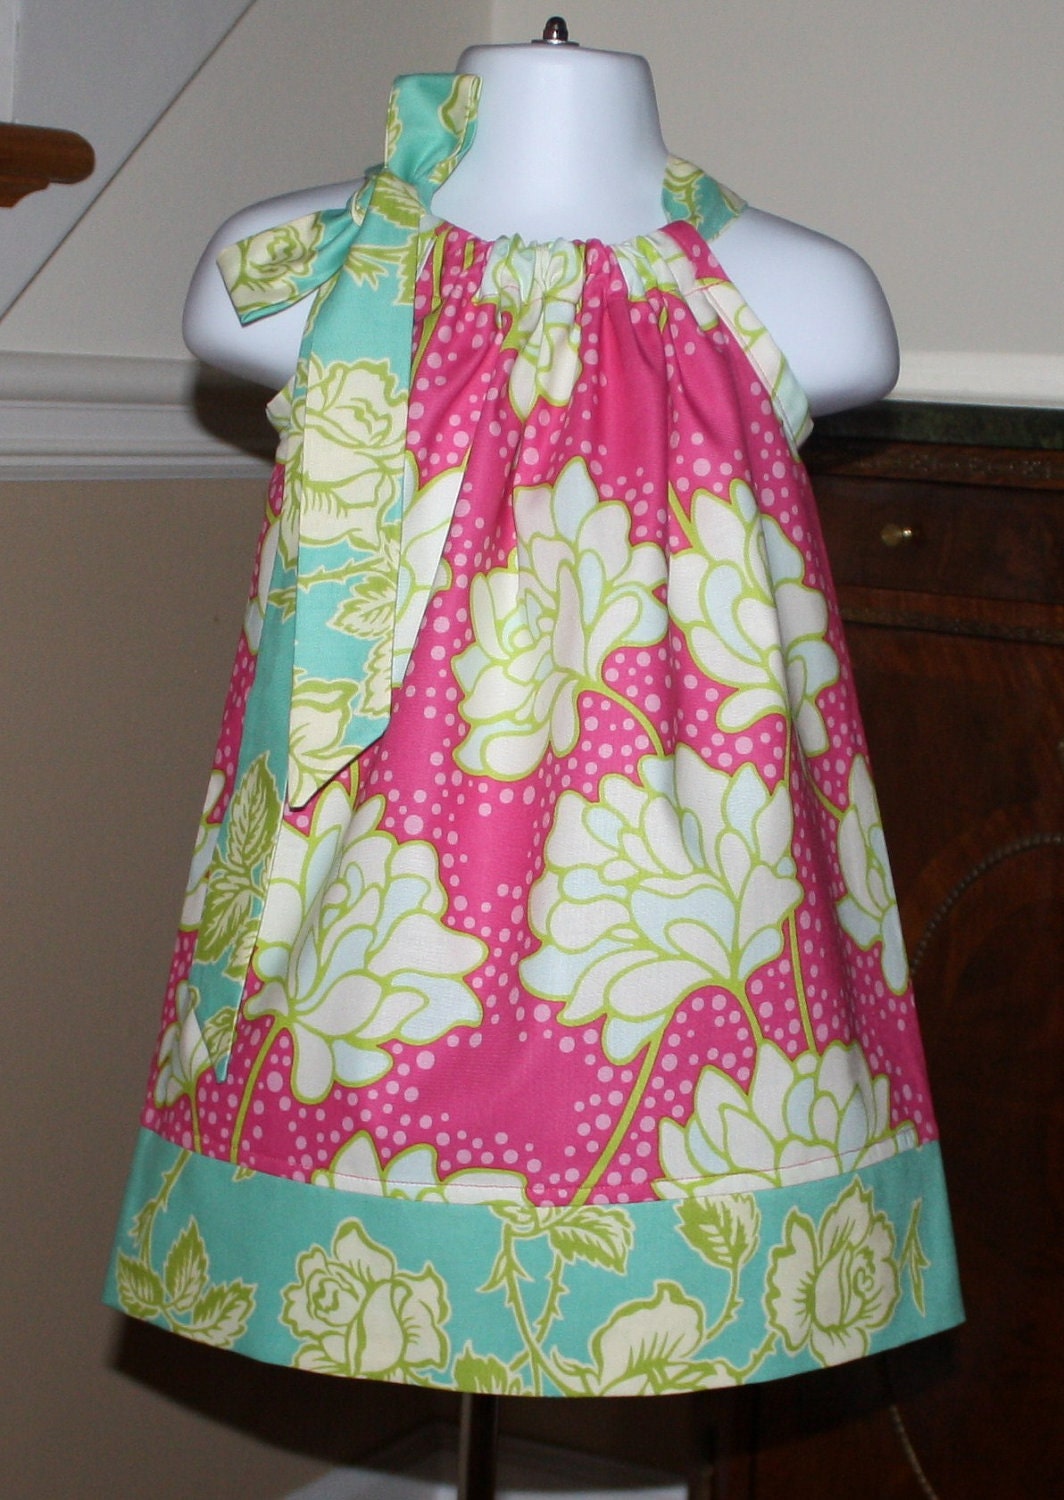 Easter Pillowcase dress girls baby toddler poppies pink